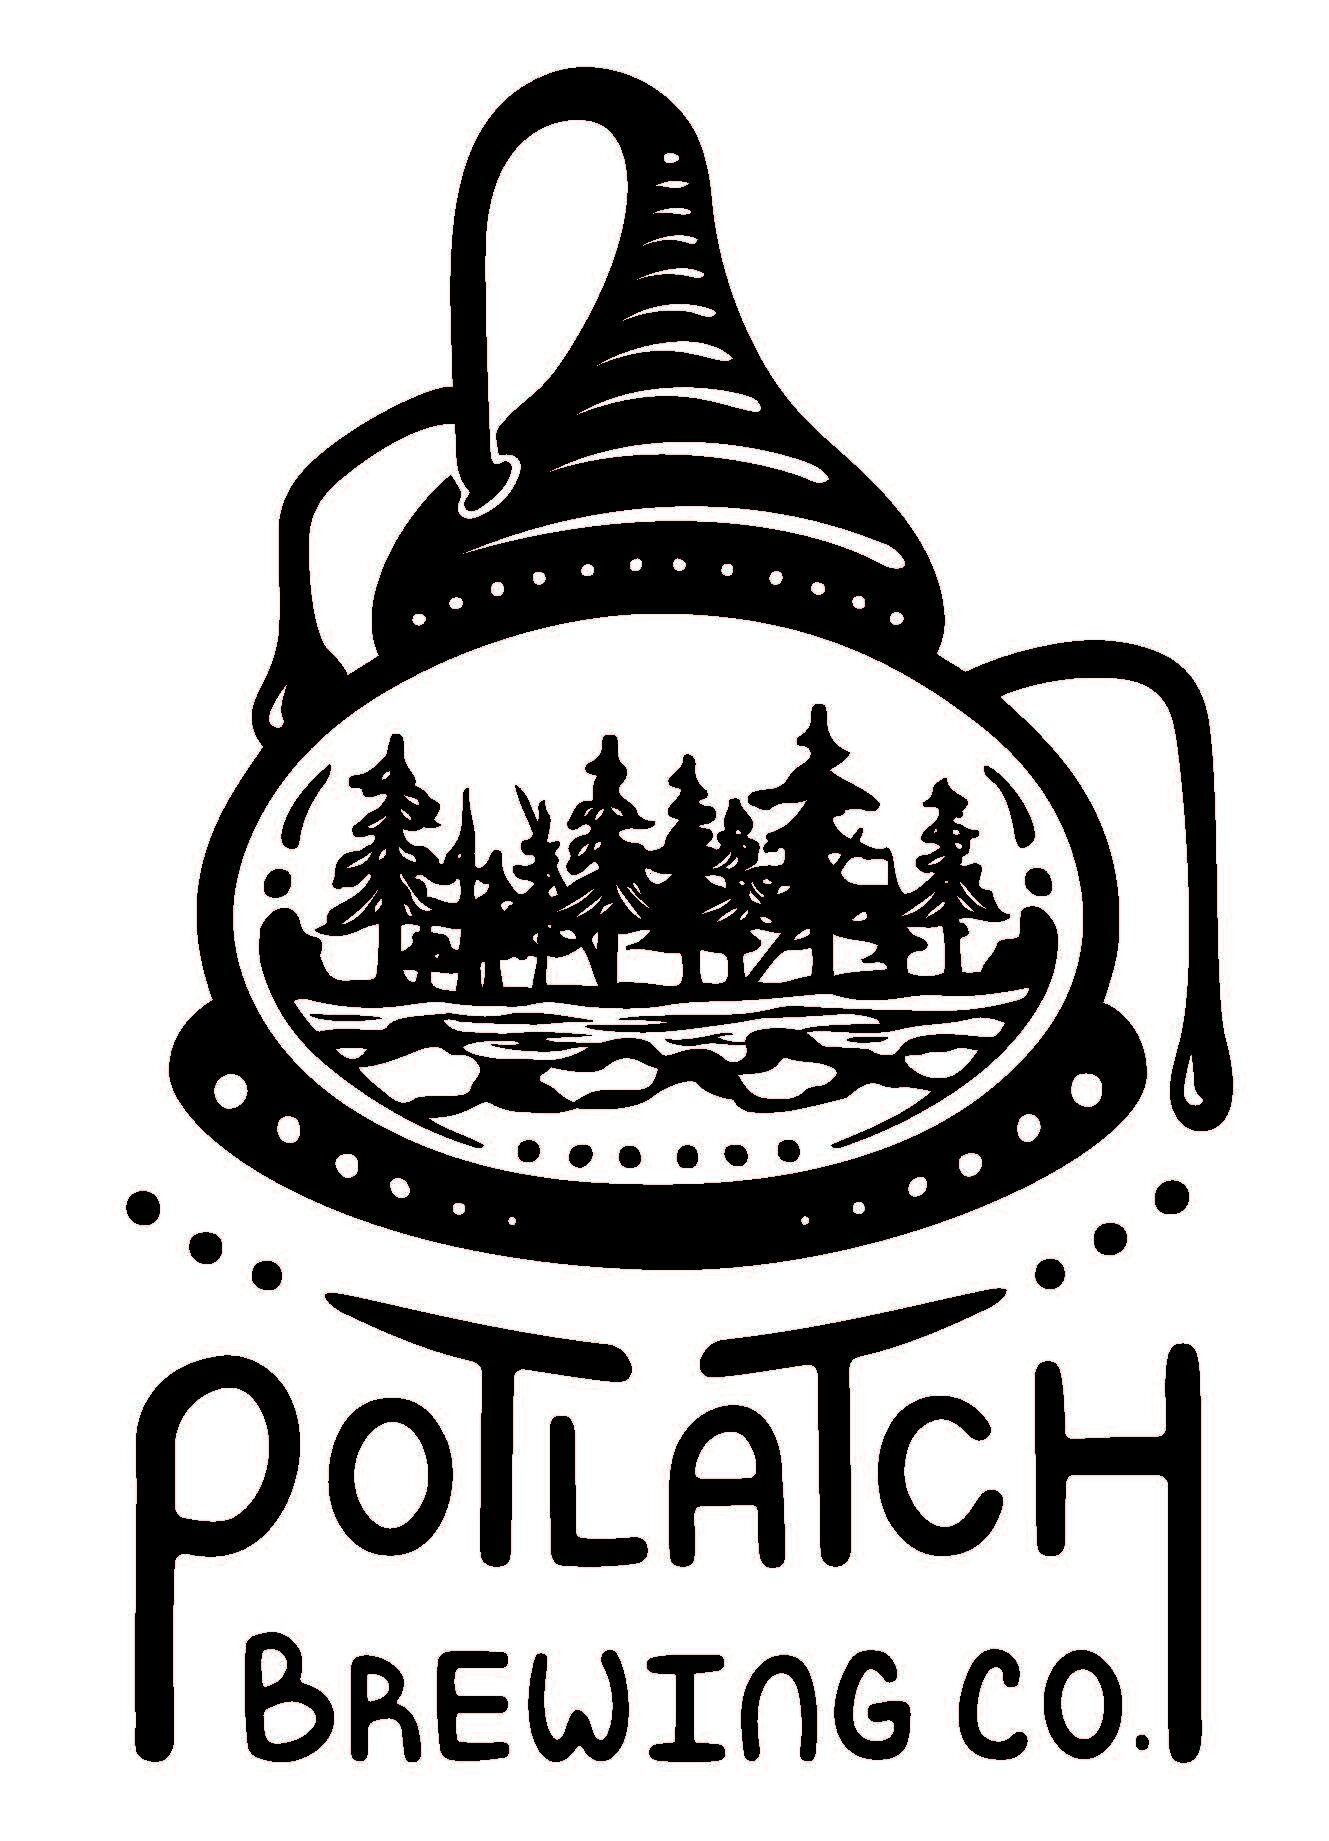 Potlatch Brewing Co.